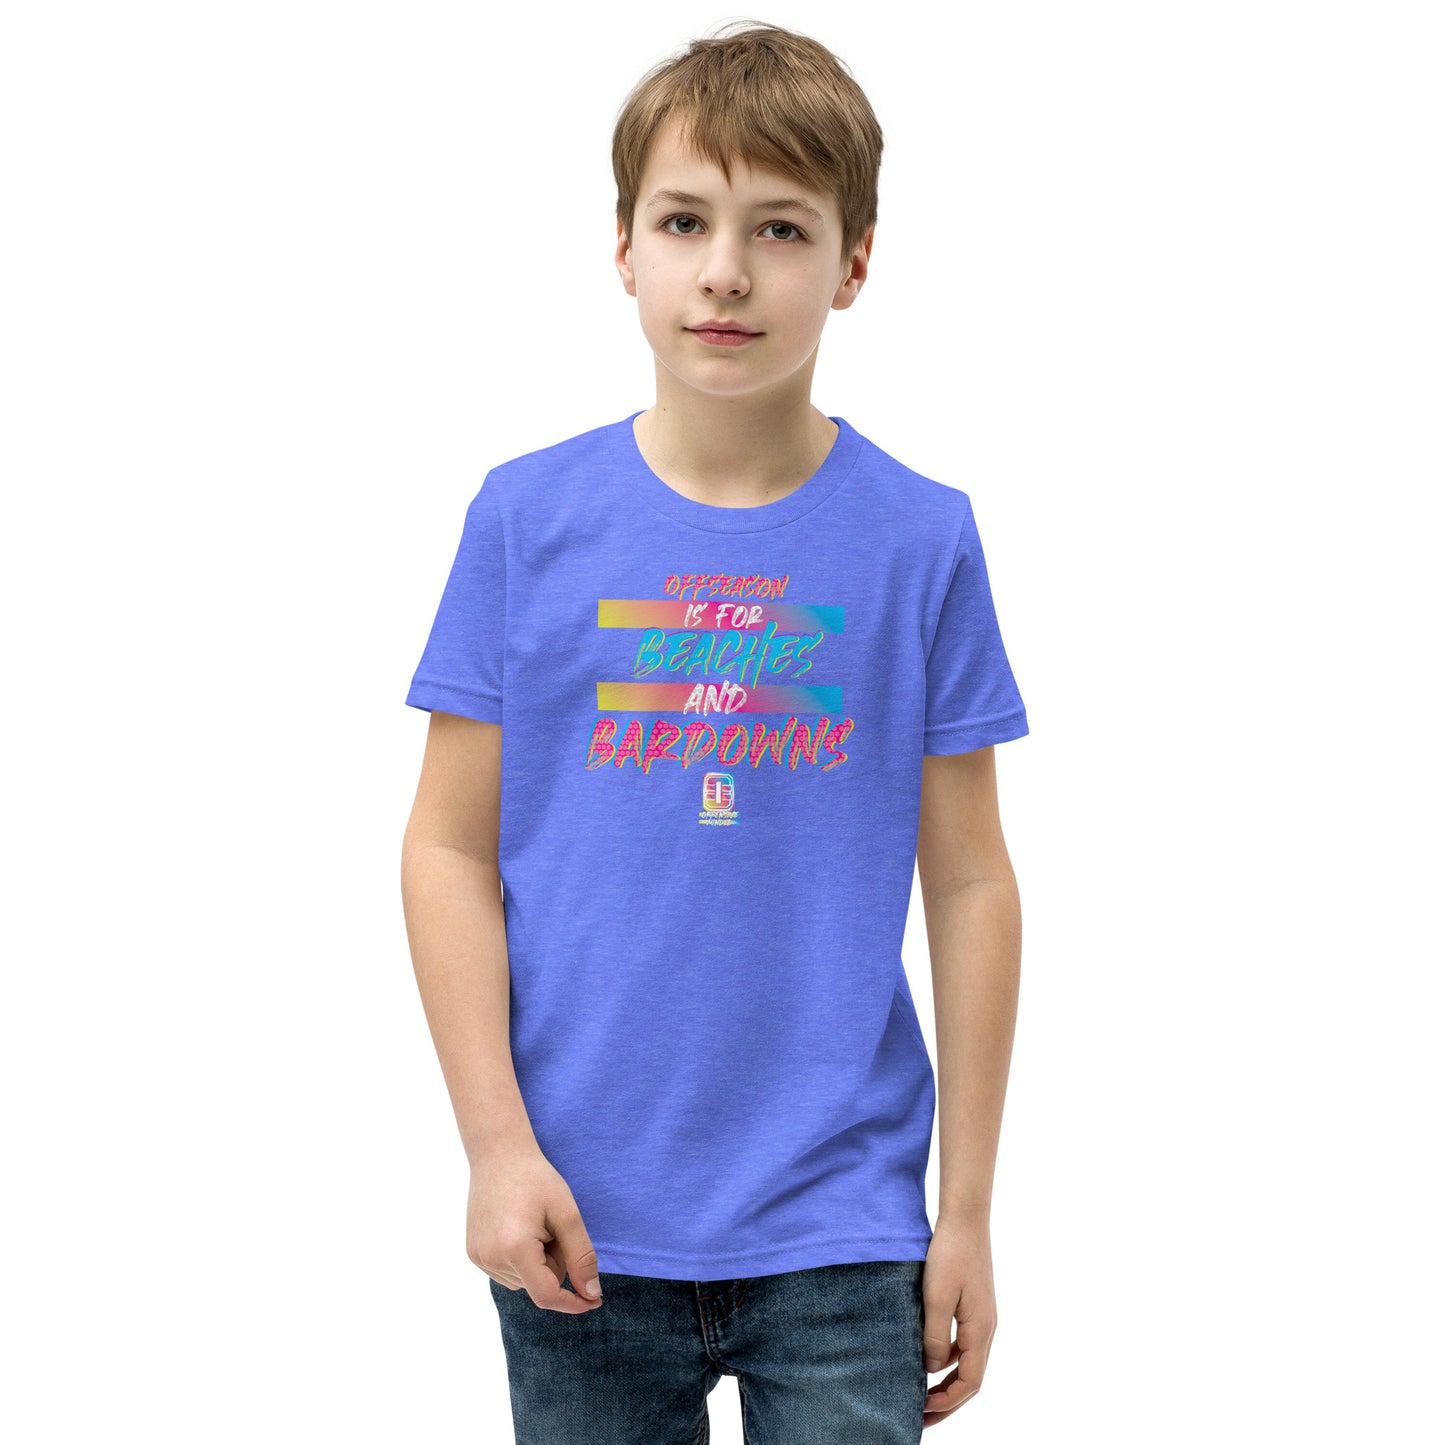 OM Hype Beaches & Bardowns Youth Short Sleeve T-Shirt